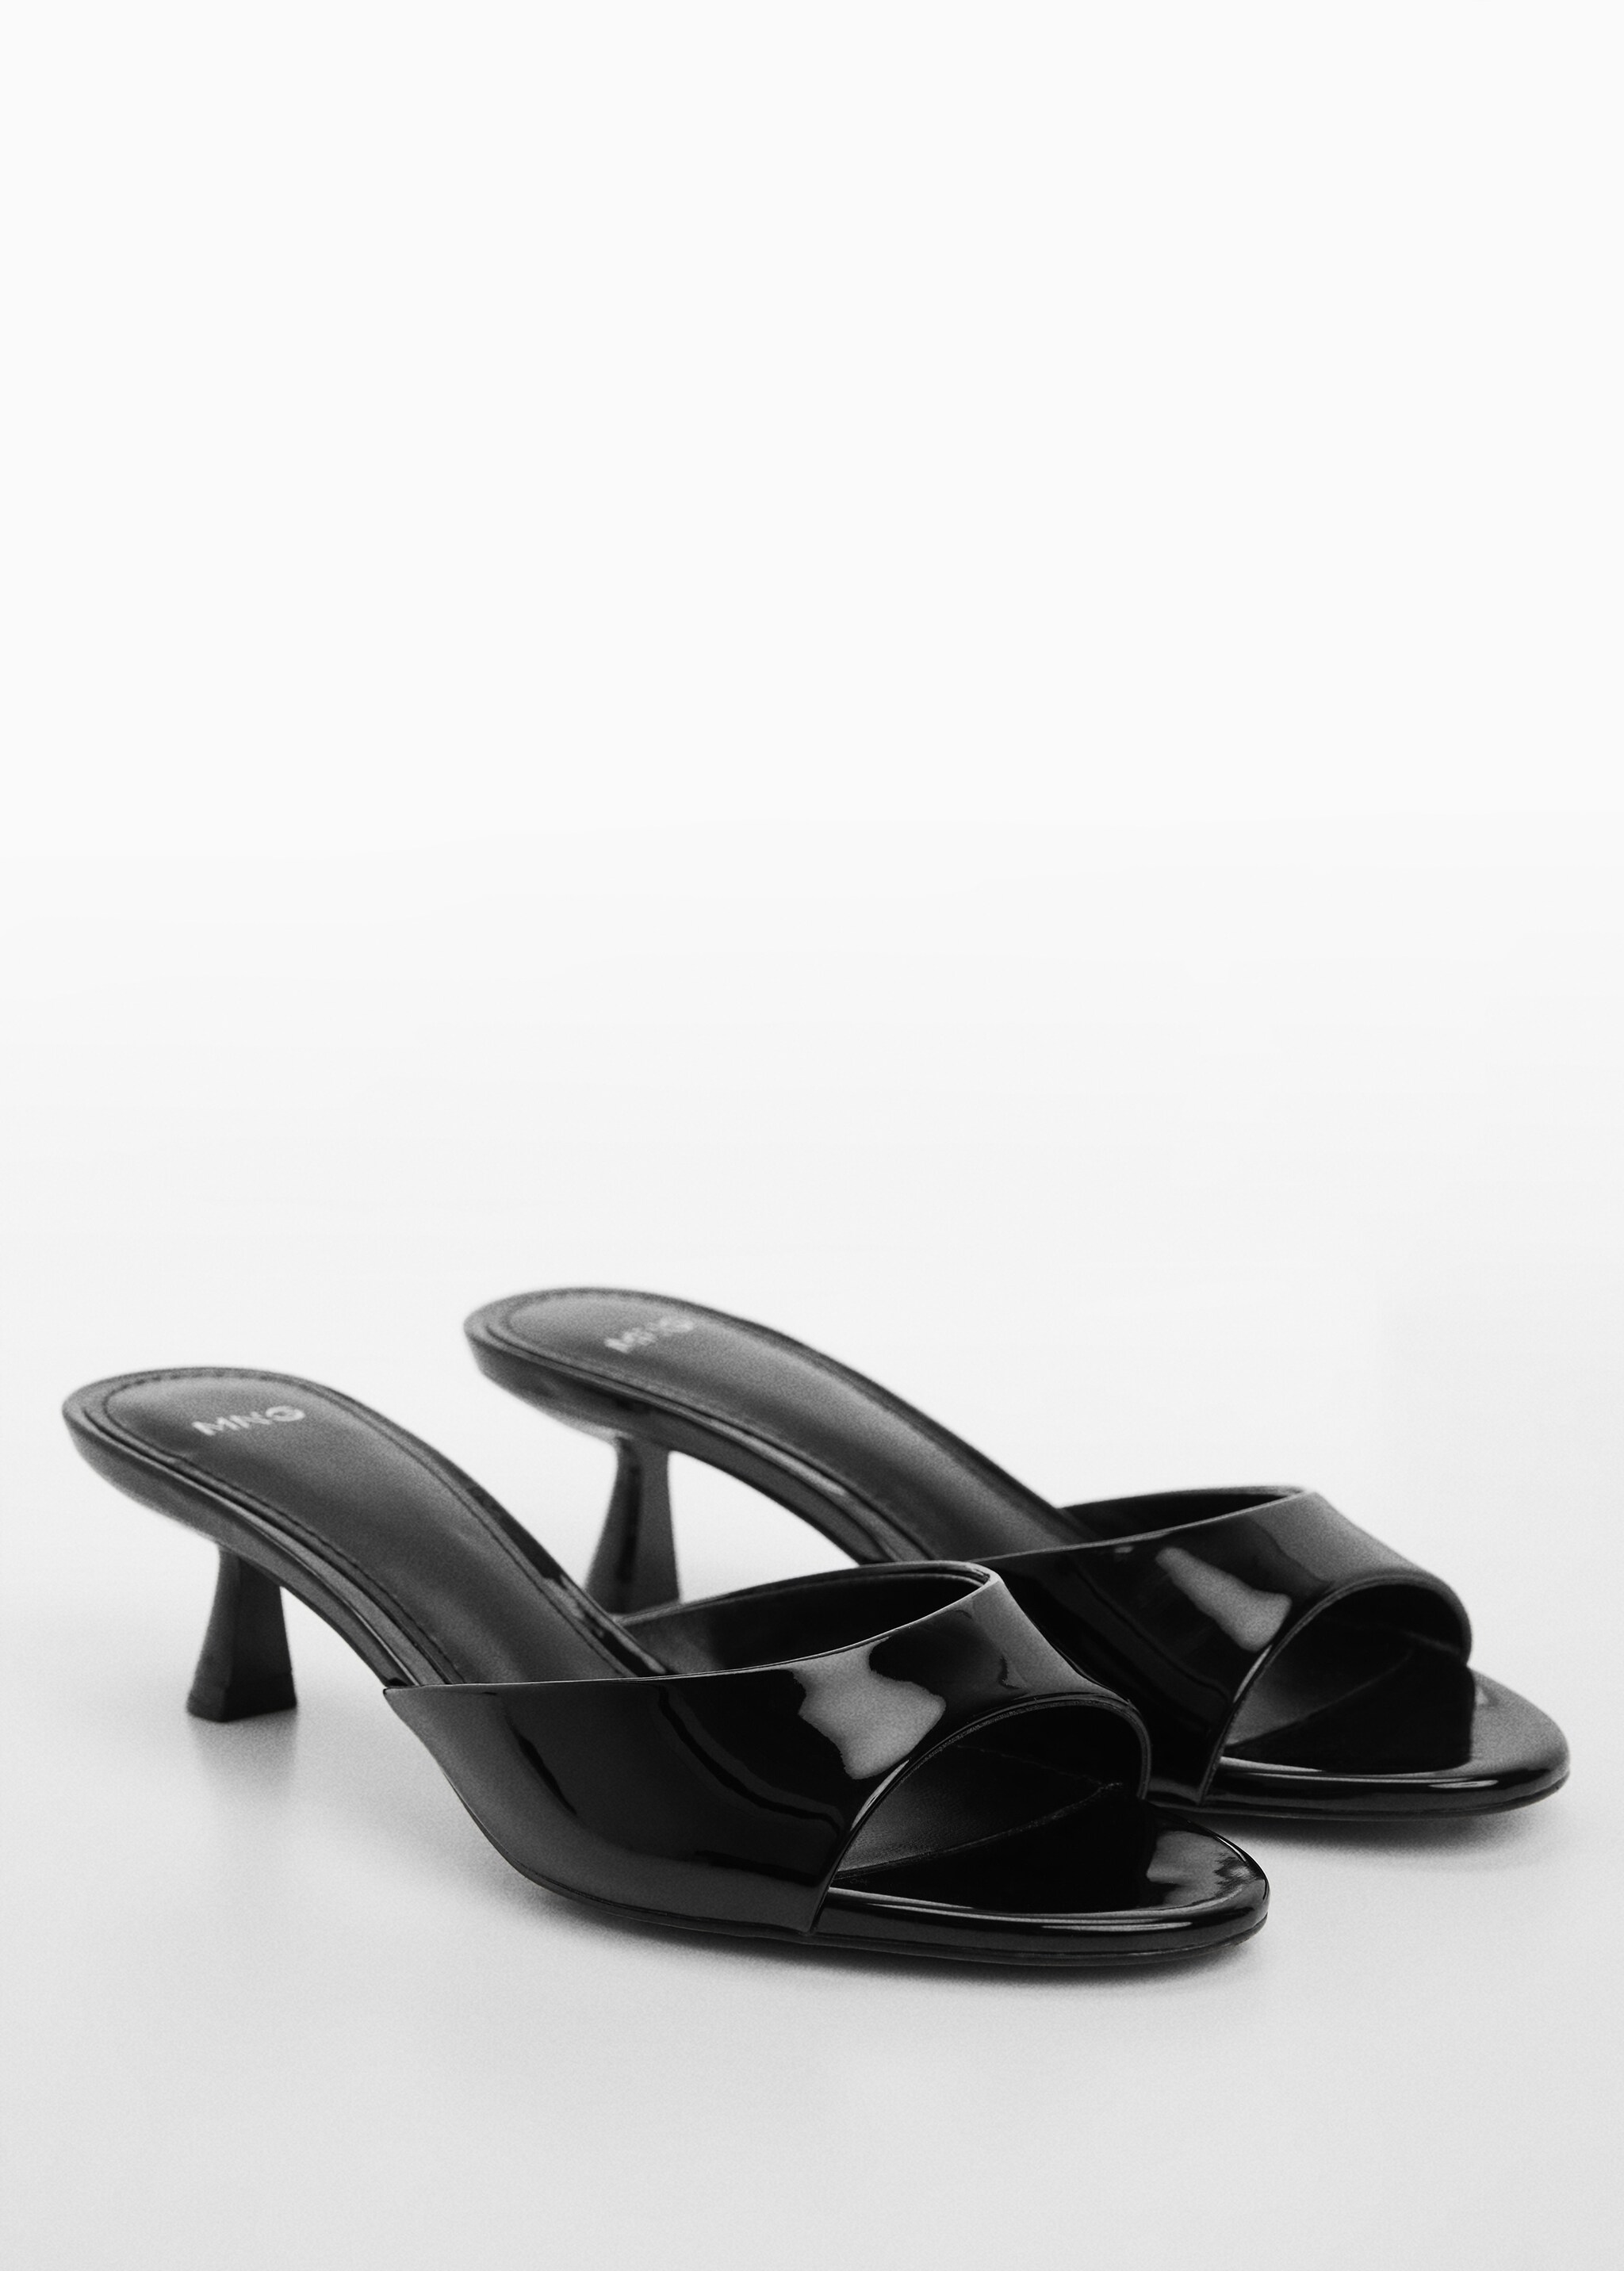 Patent leather effect heeled sandal - Medium plane